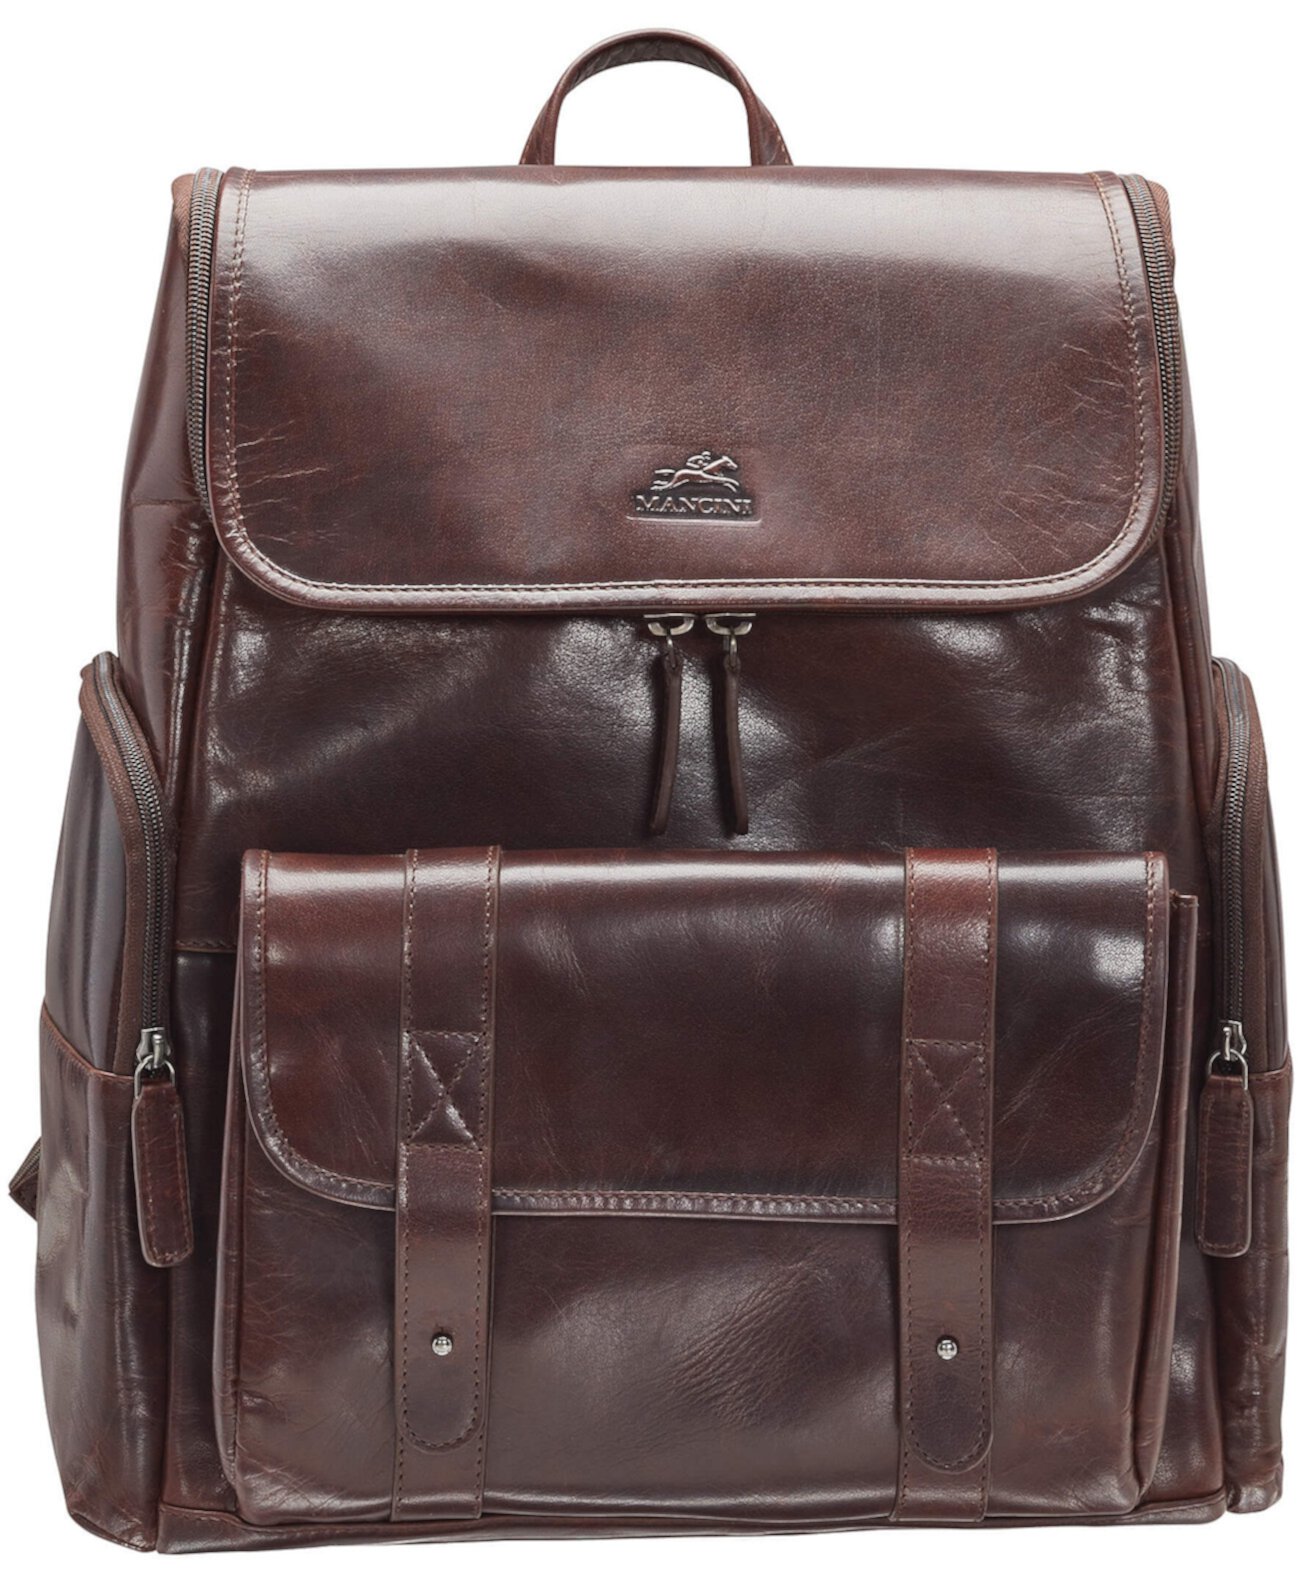 Мужской рюкзак Buffalo с отделением для ноутбука на молнии и планшетом Mancini